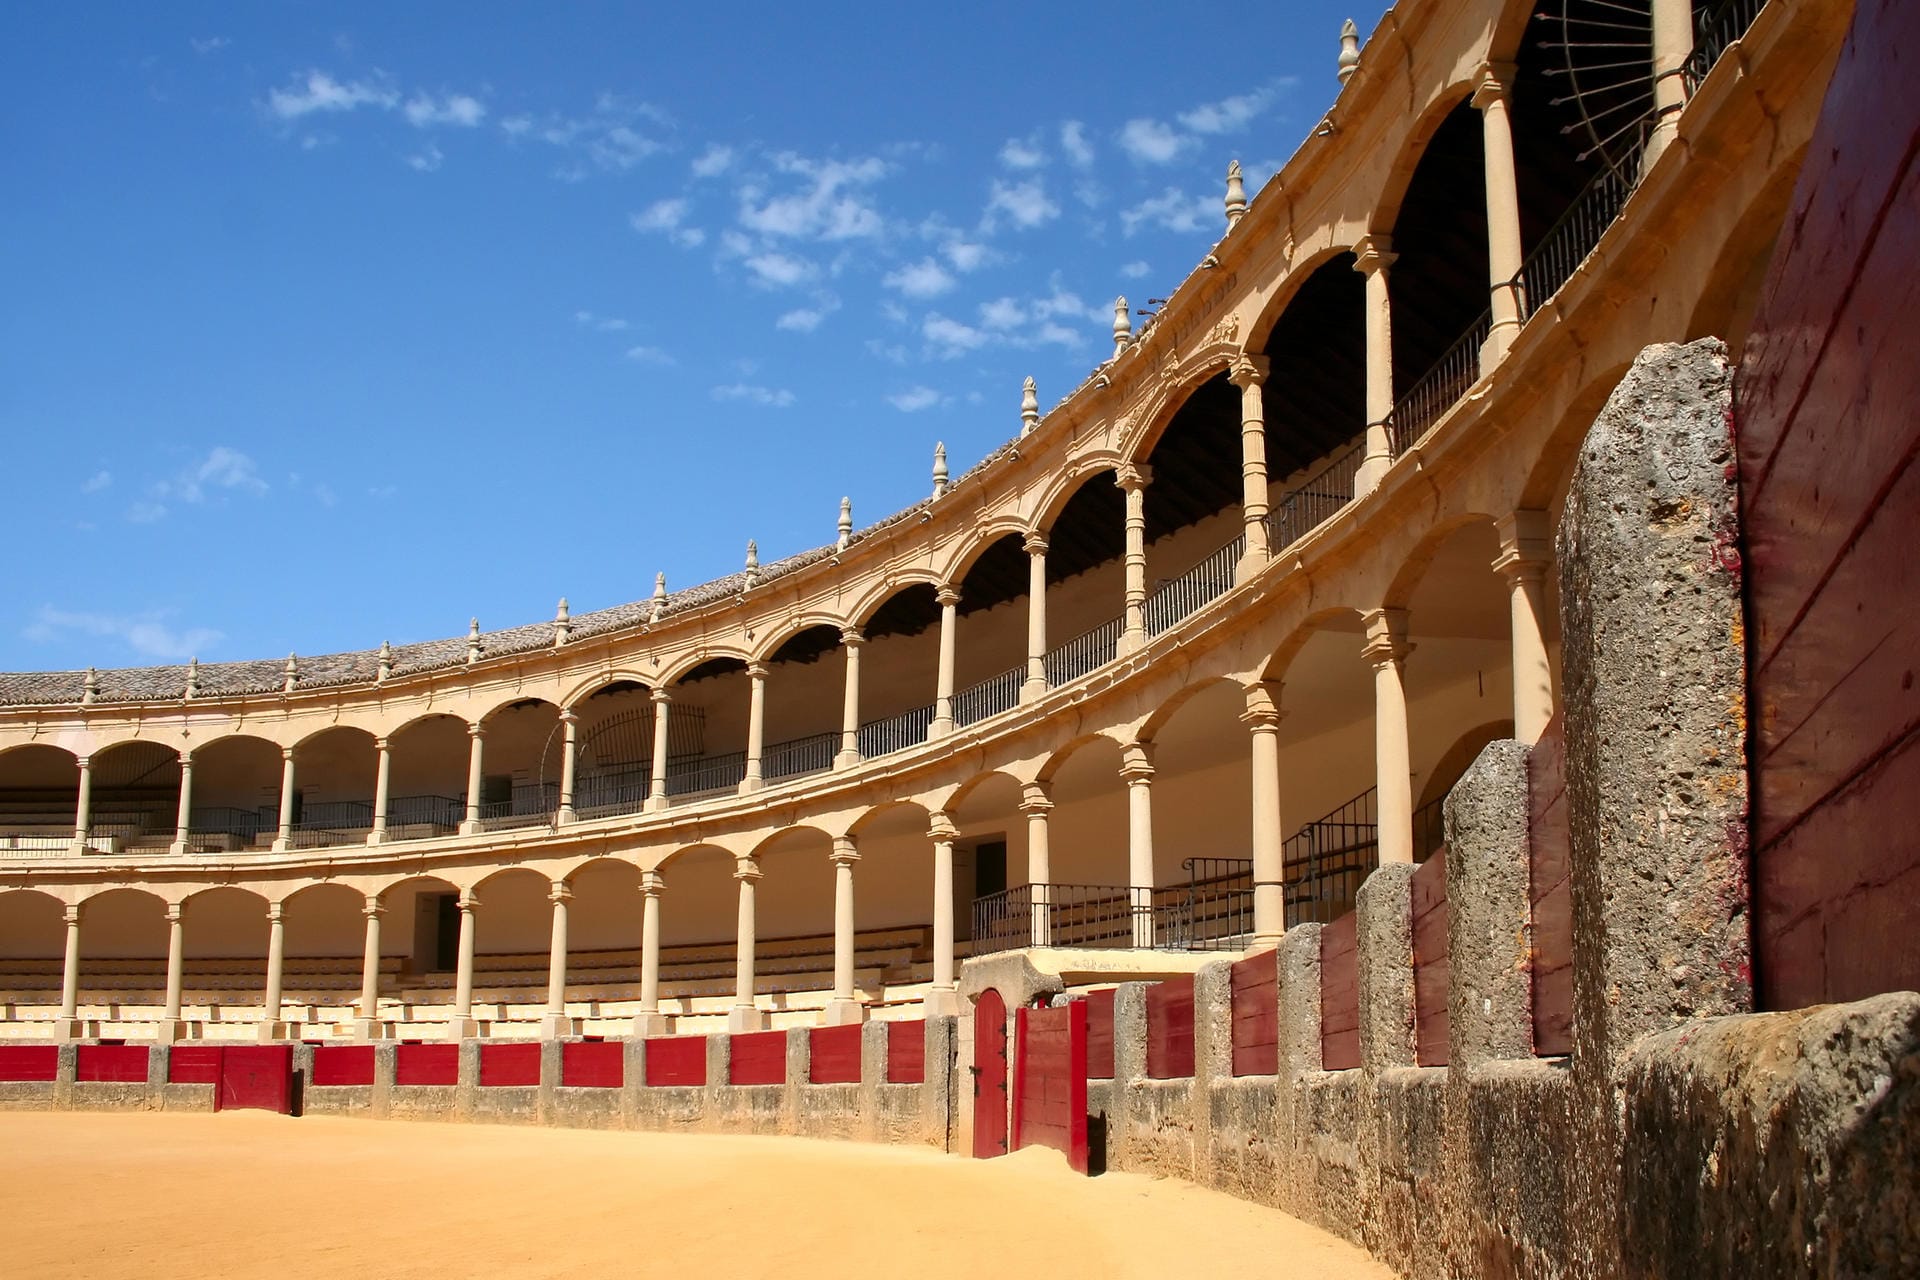 Die Stierkampfarena "Plaza de los Toros" soll die älteste Arena Spaniens sein.